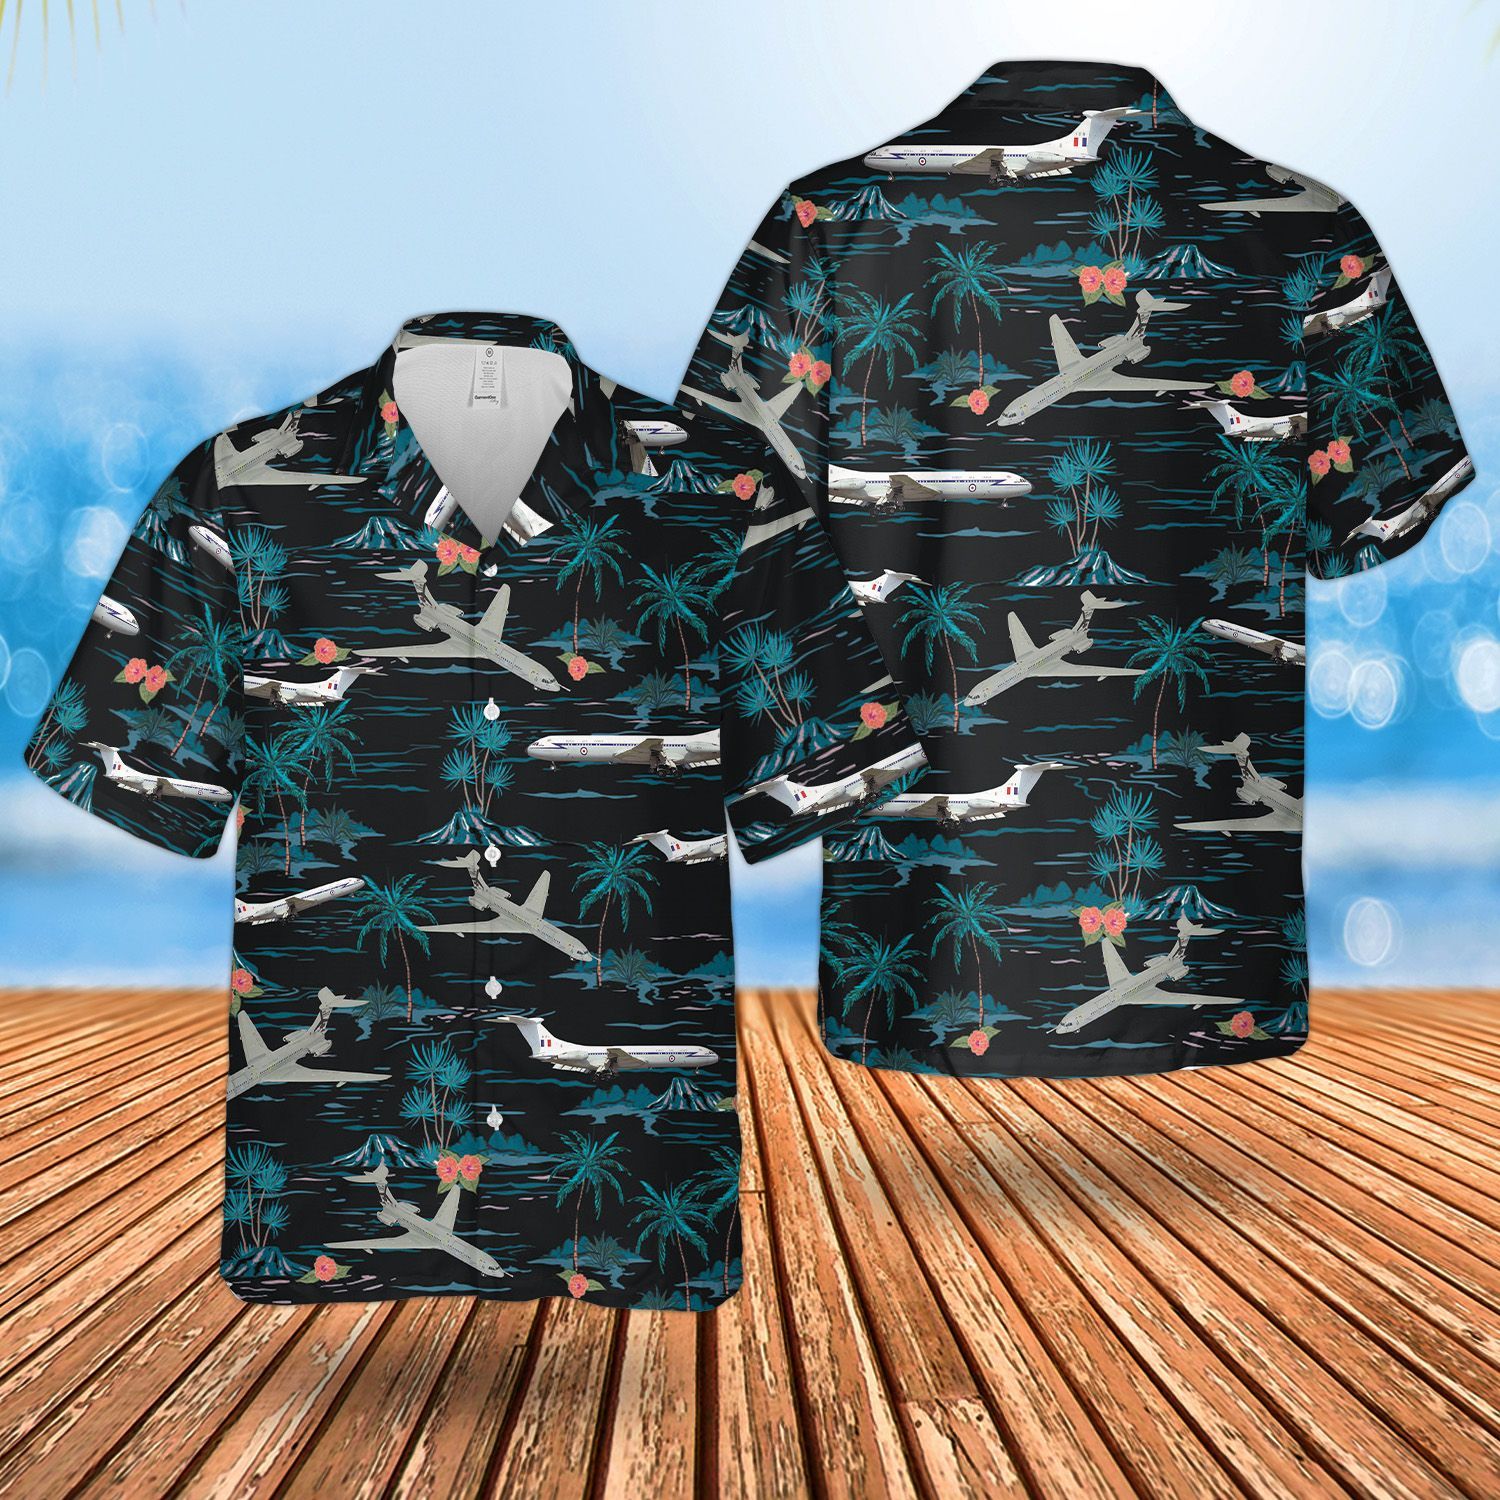 Enjoy your summer with top cool hawaiian shirt below 297